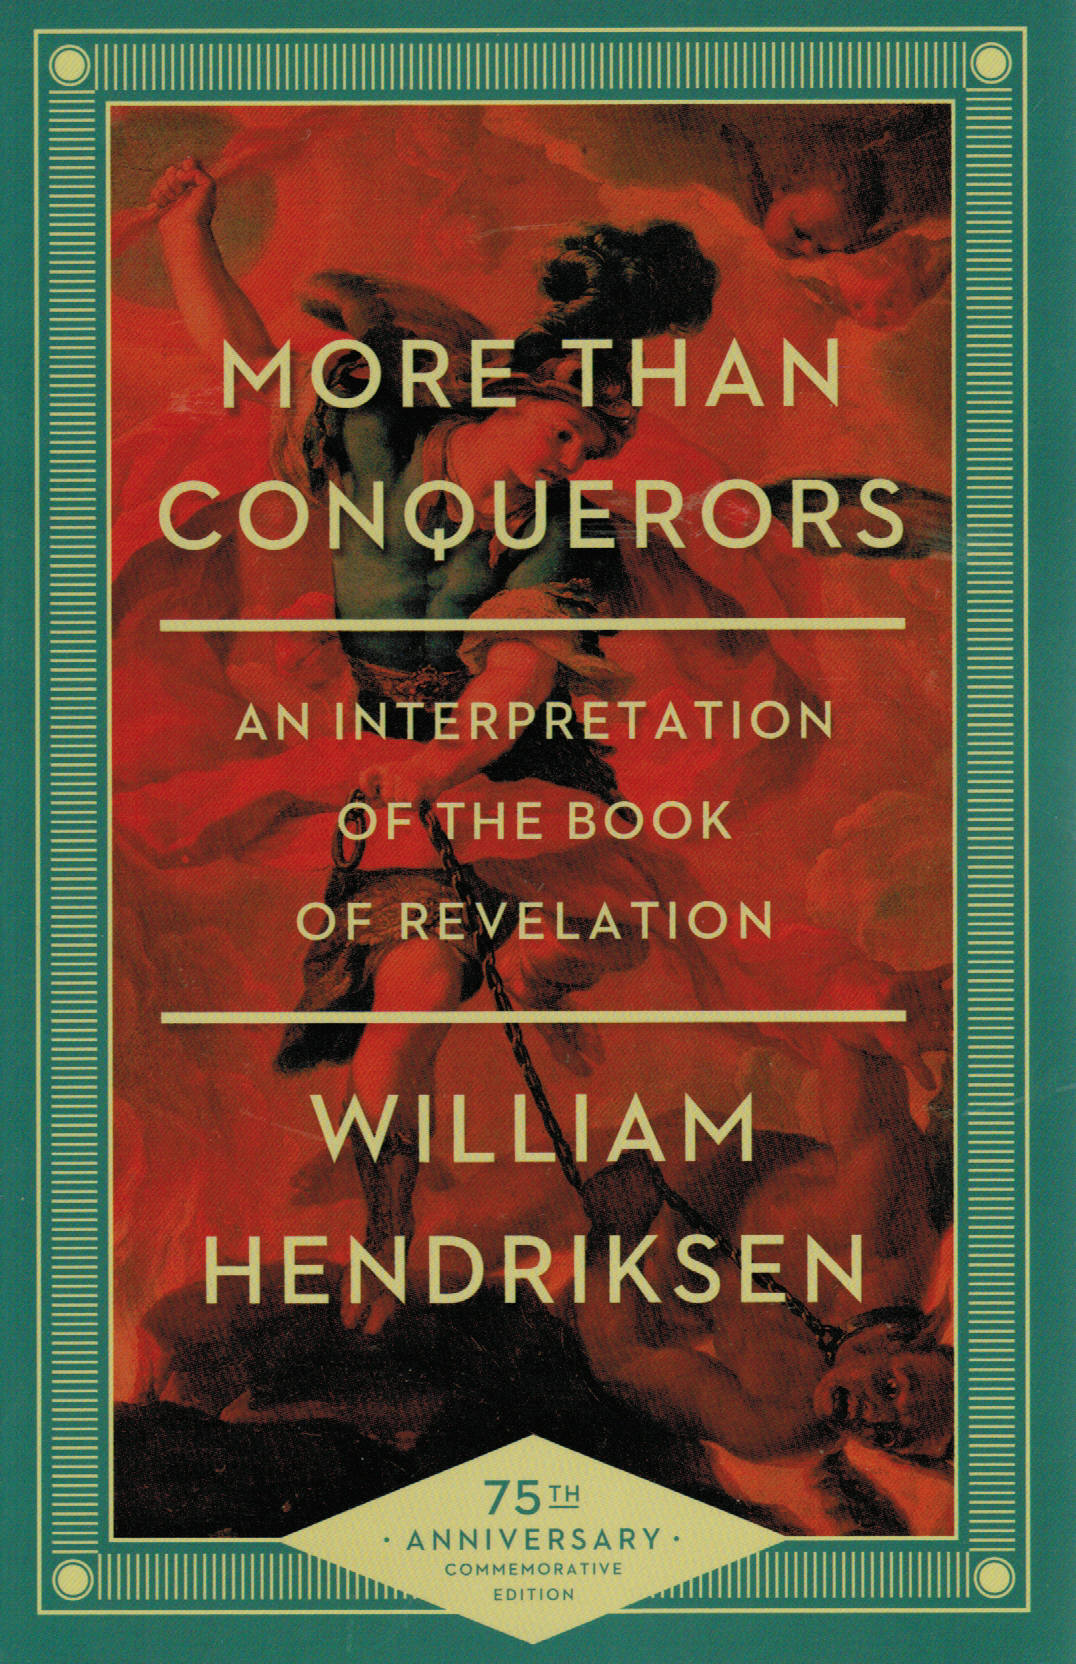 More than Conquerors: an Interpretation of the book of Revelation